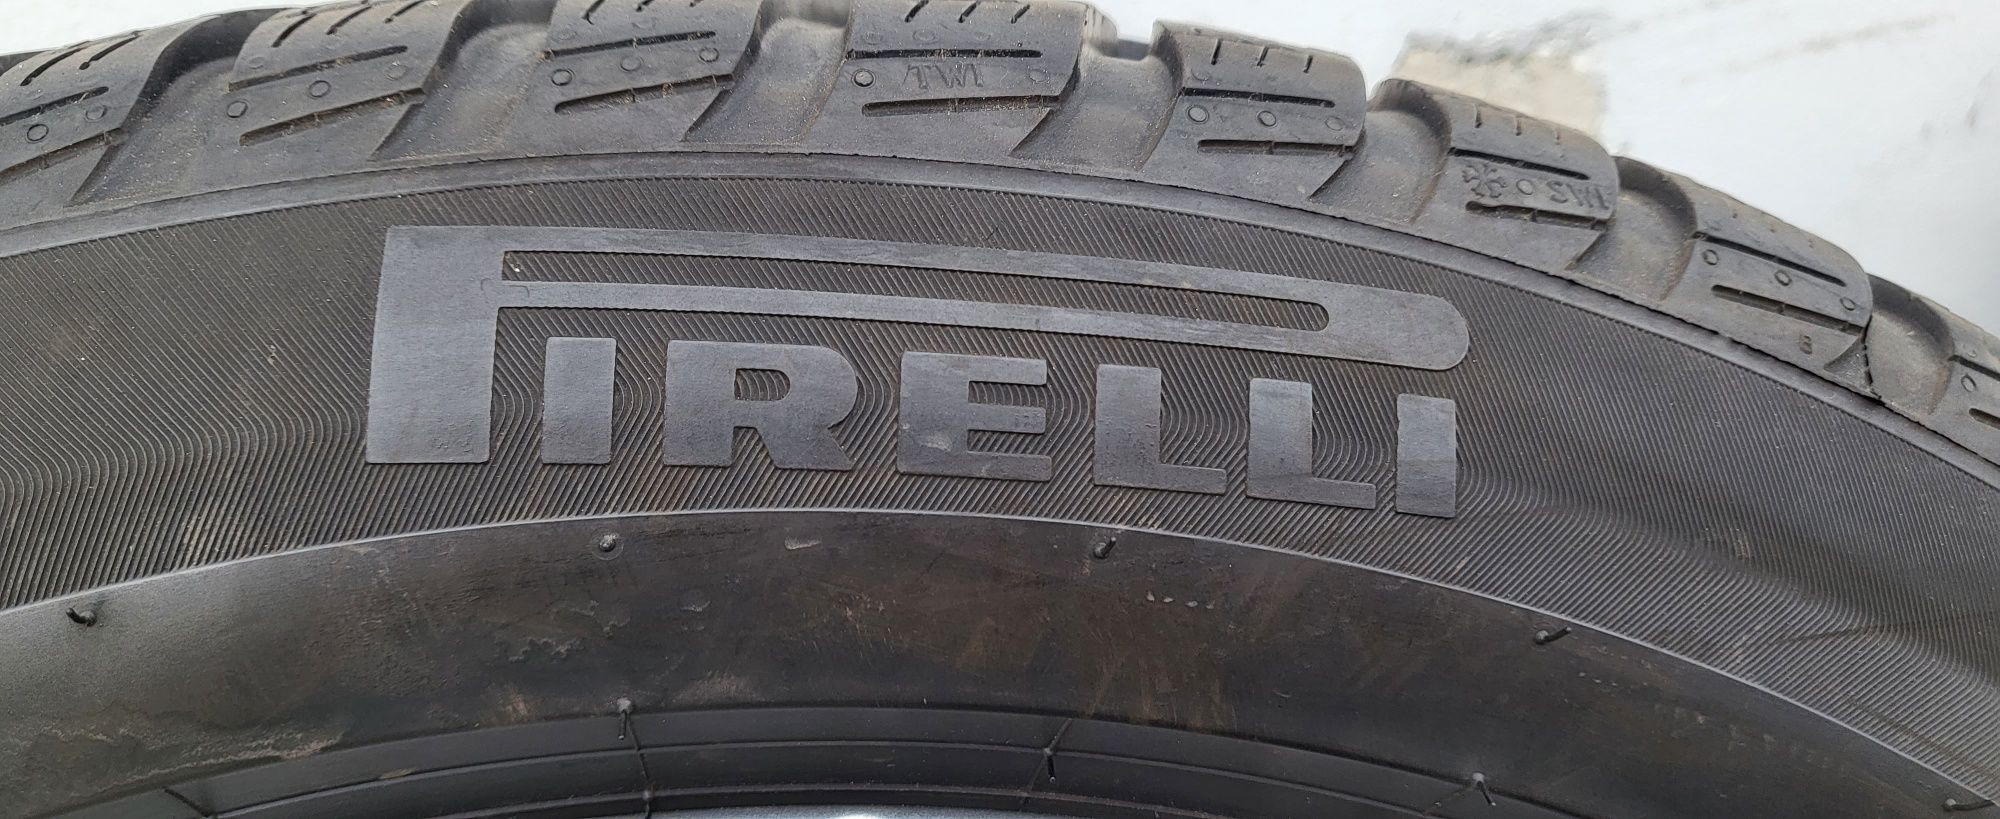 Jante aliaj originale Mercedes R17, anvelope iarna Pirelli 225 50 17